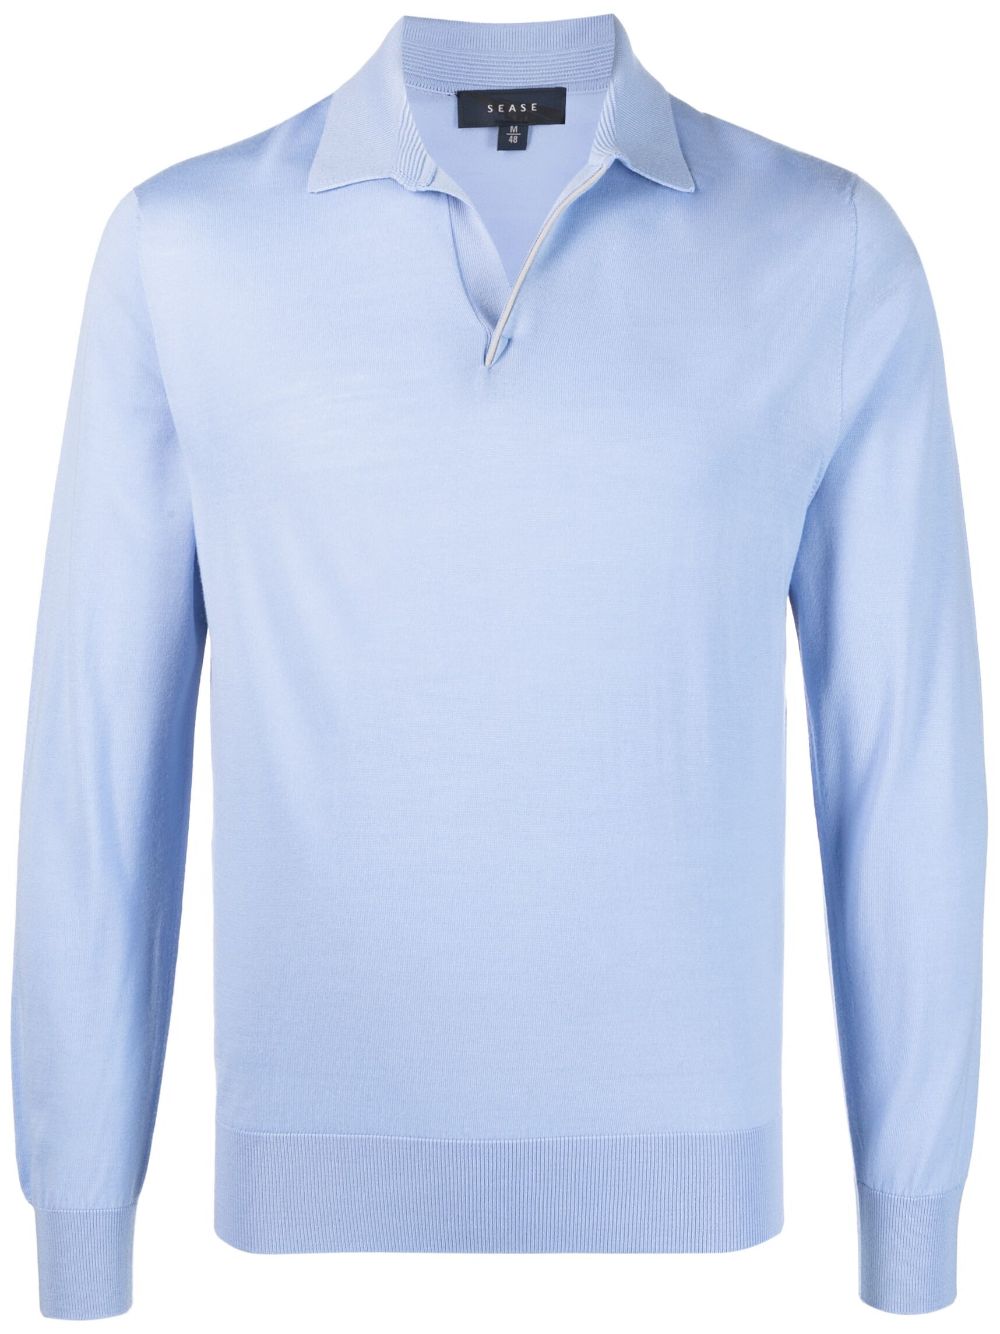 Sease fine-knit polo shirt - Blue von Sease